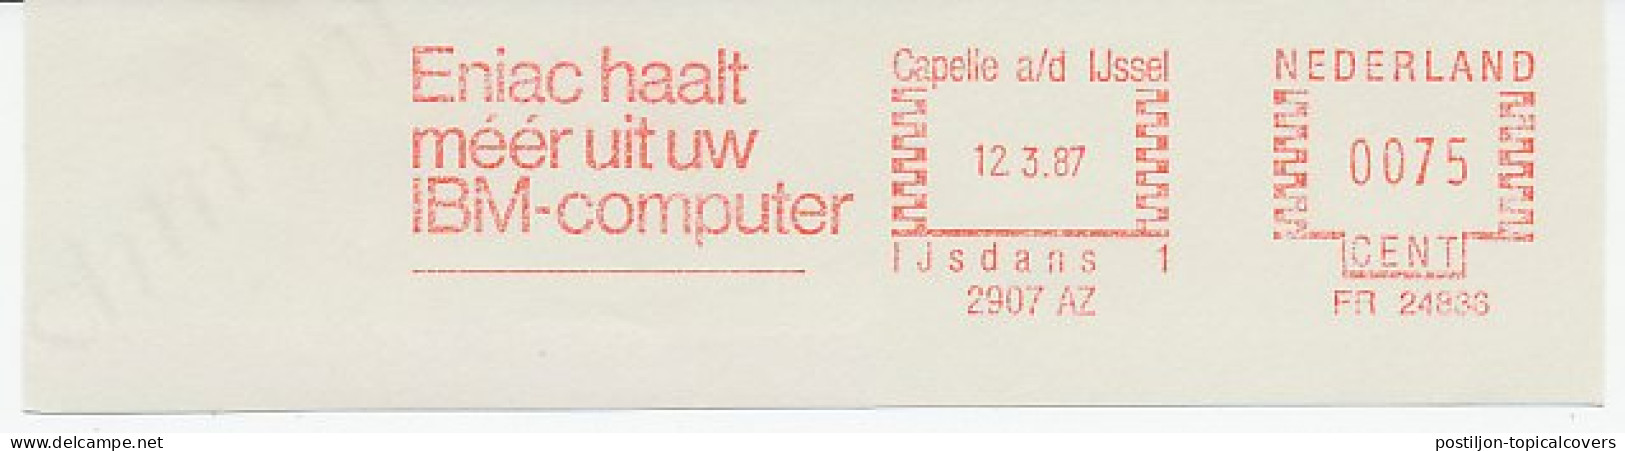 Meter Cut Netherlands 1987 Computer - IBM - Eniac - Computers